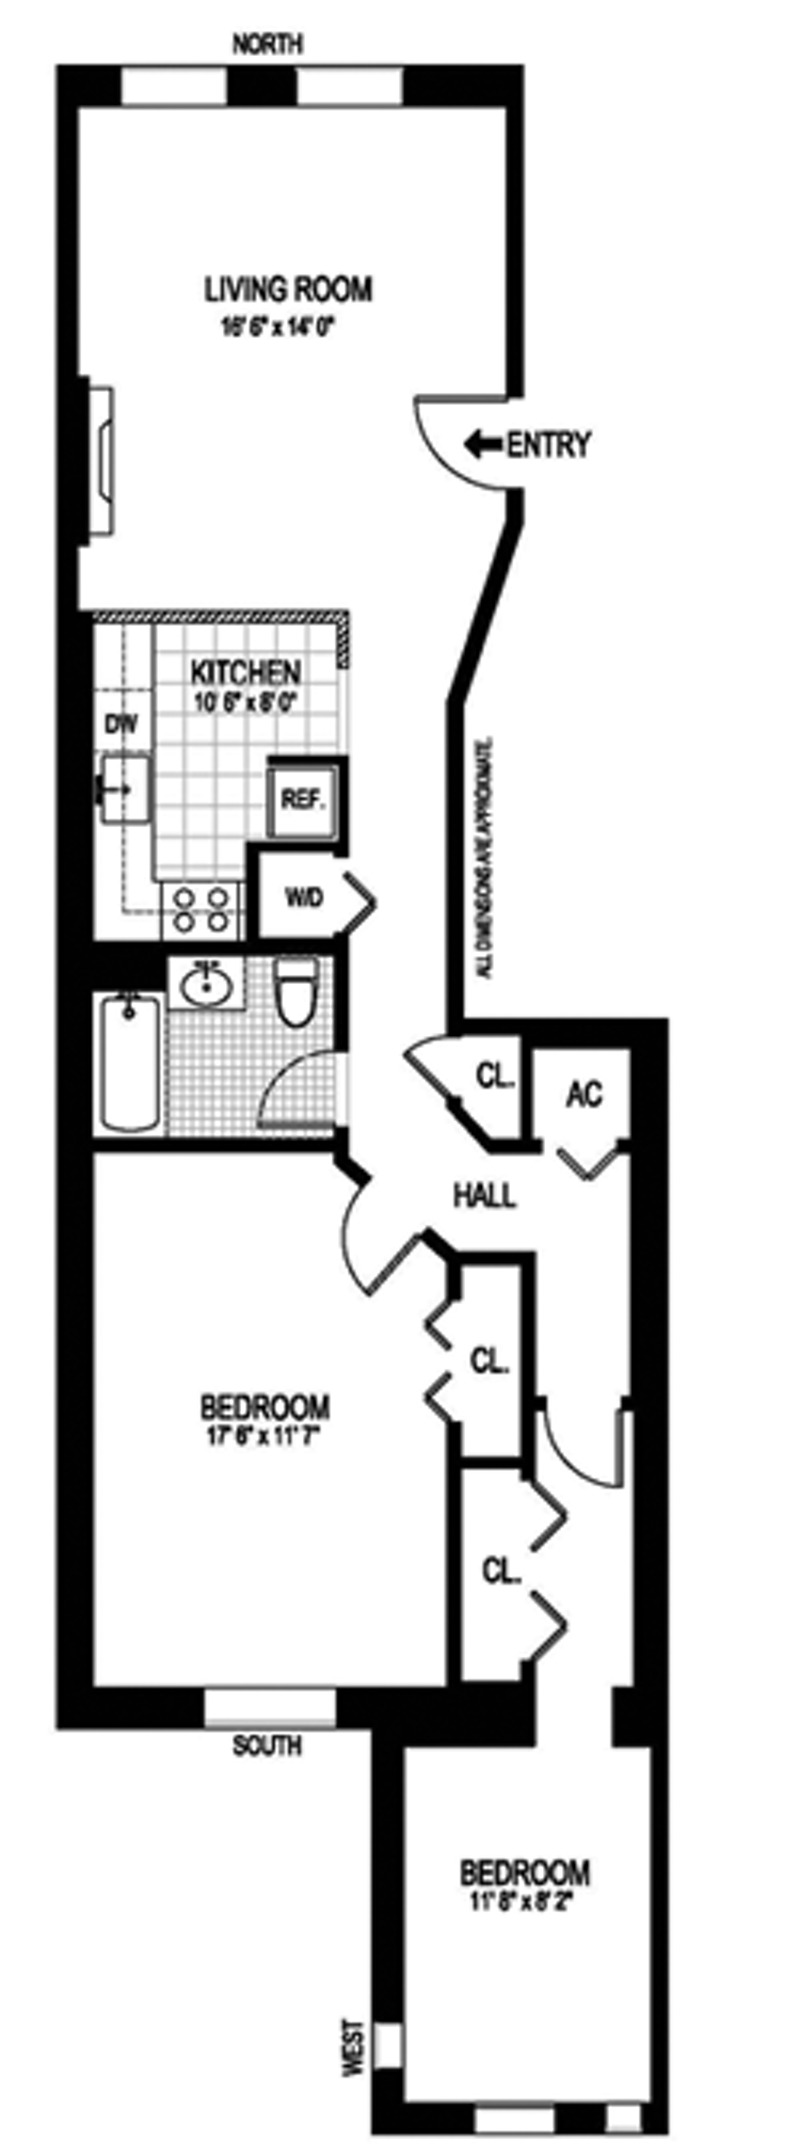 Floorplan for 138 West 121st Street